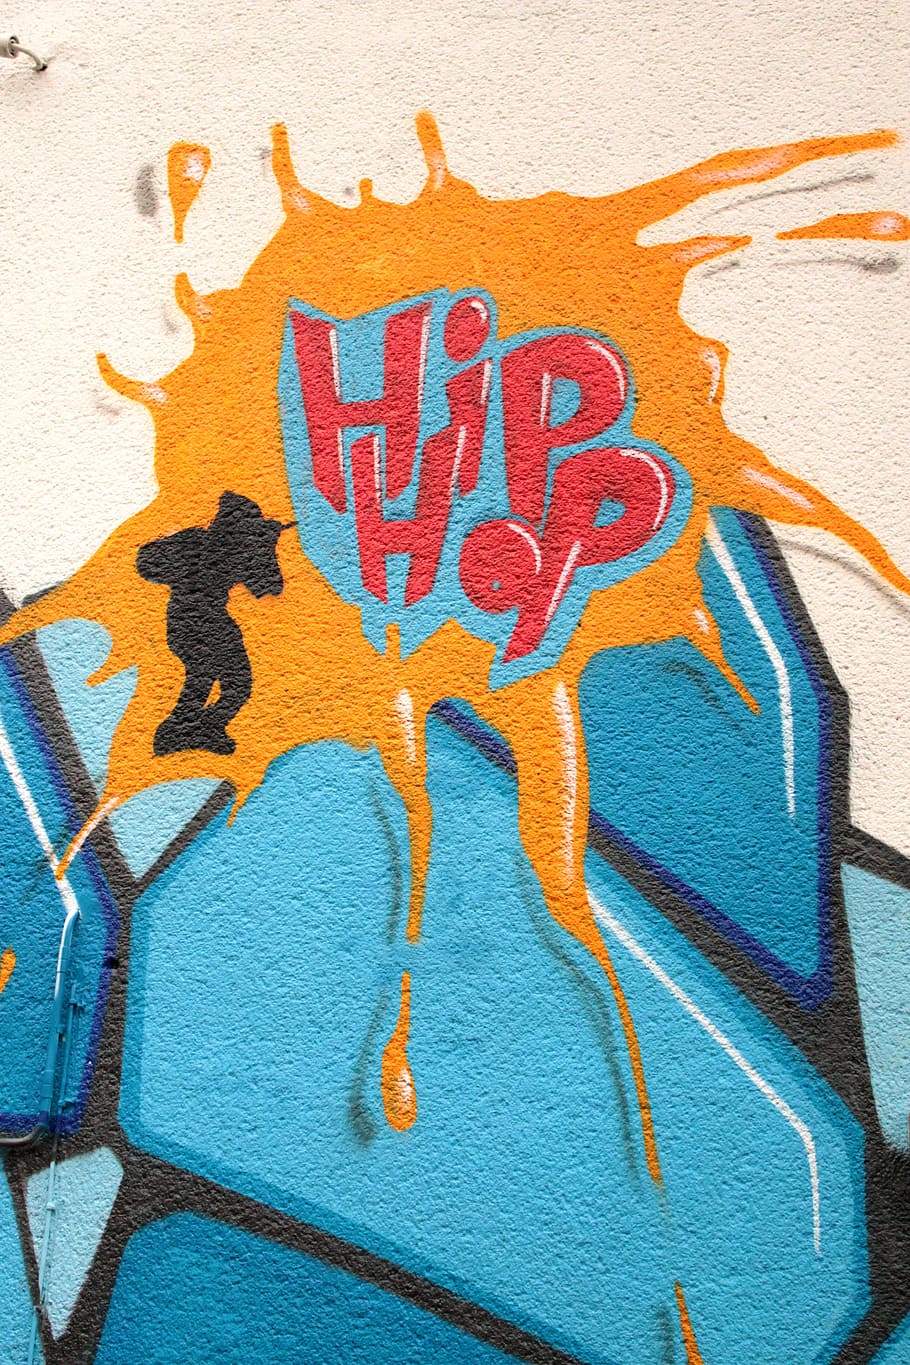 Ilustración de hip hop, graffiti, hiphop, hip hop, hauswand, pared, casa, edificio, fachada, color